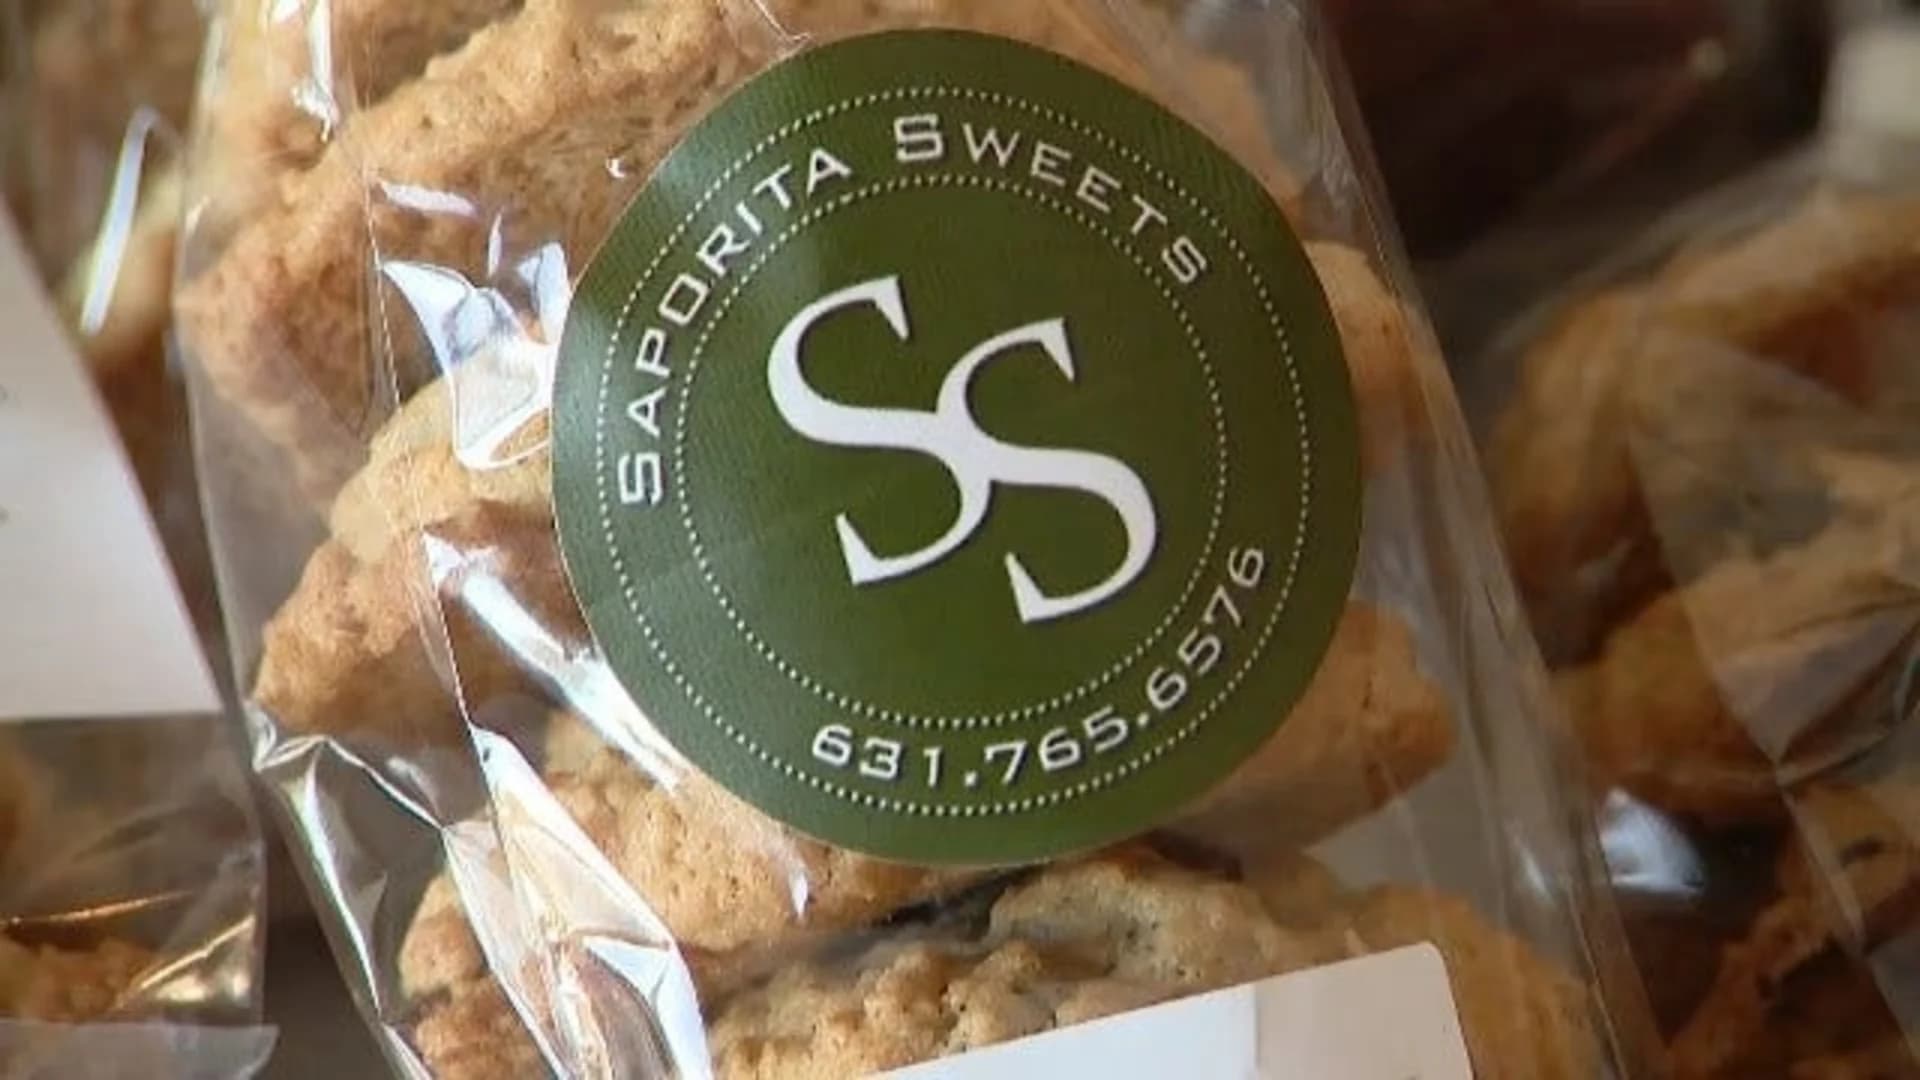 East End: Saporita Sweets